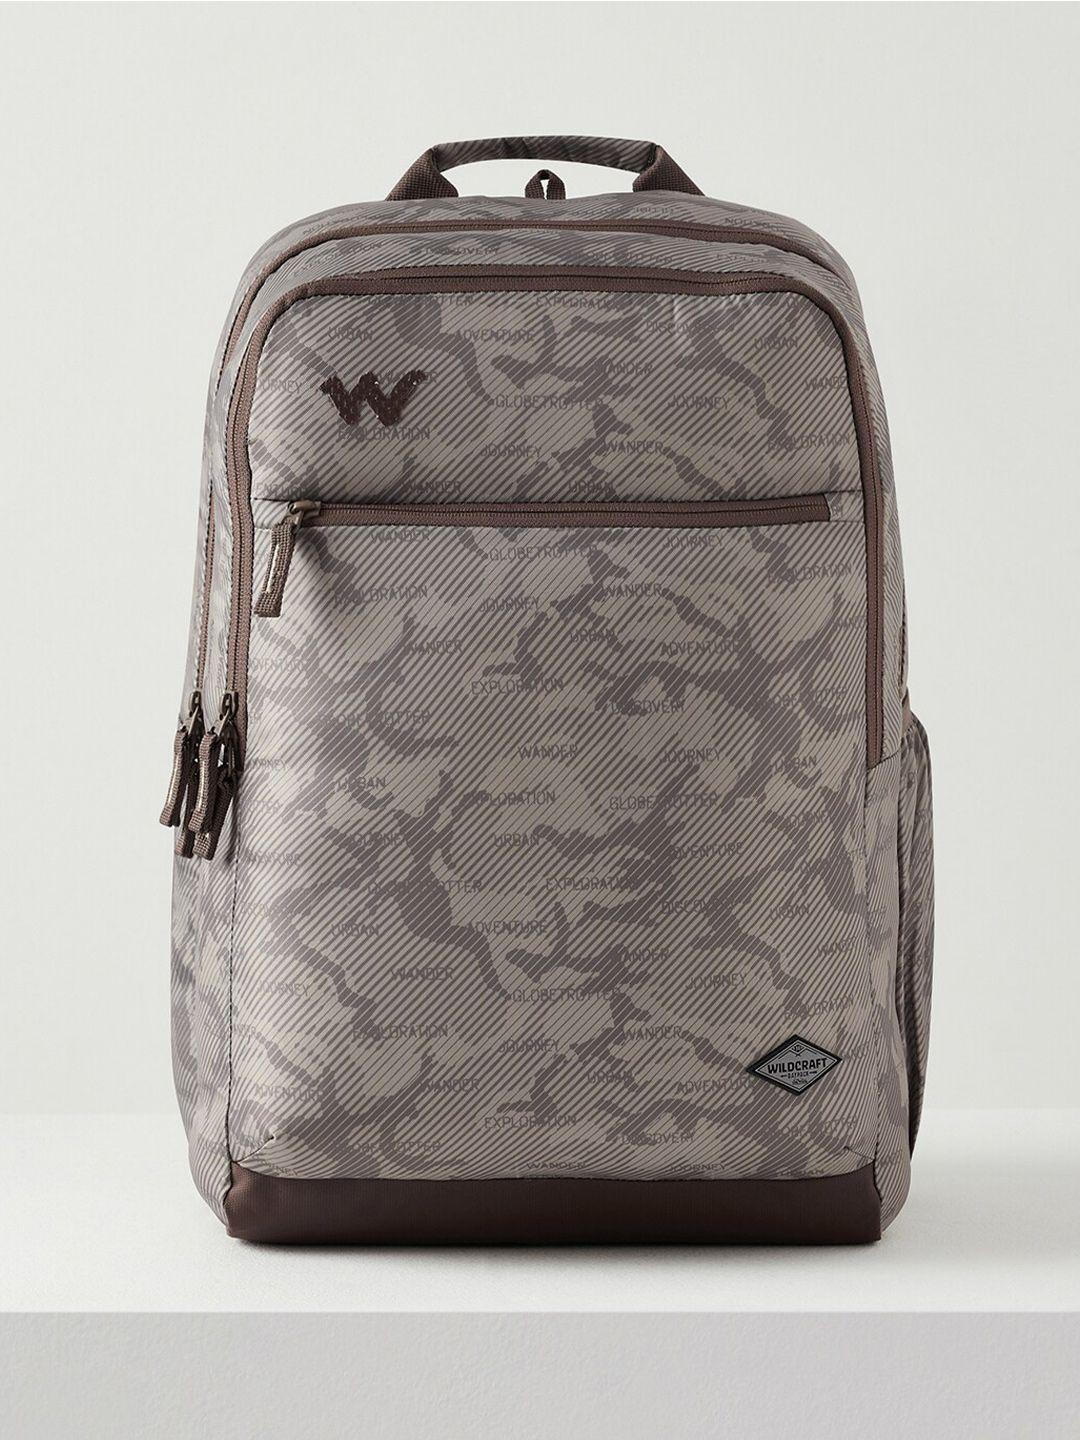 wildcraft kids camouflage printed backpack